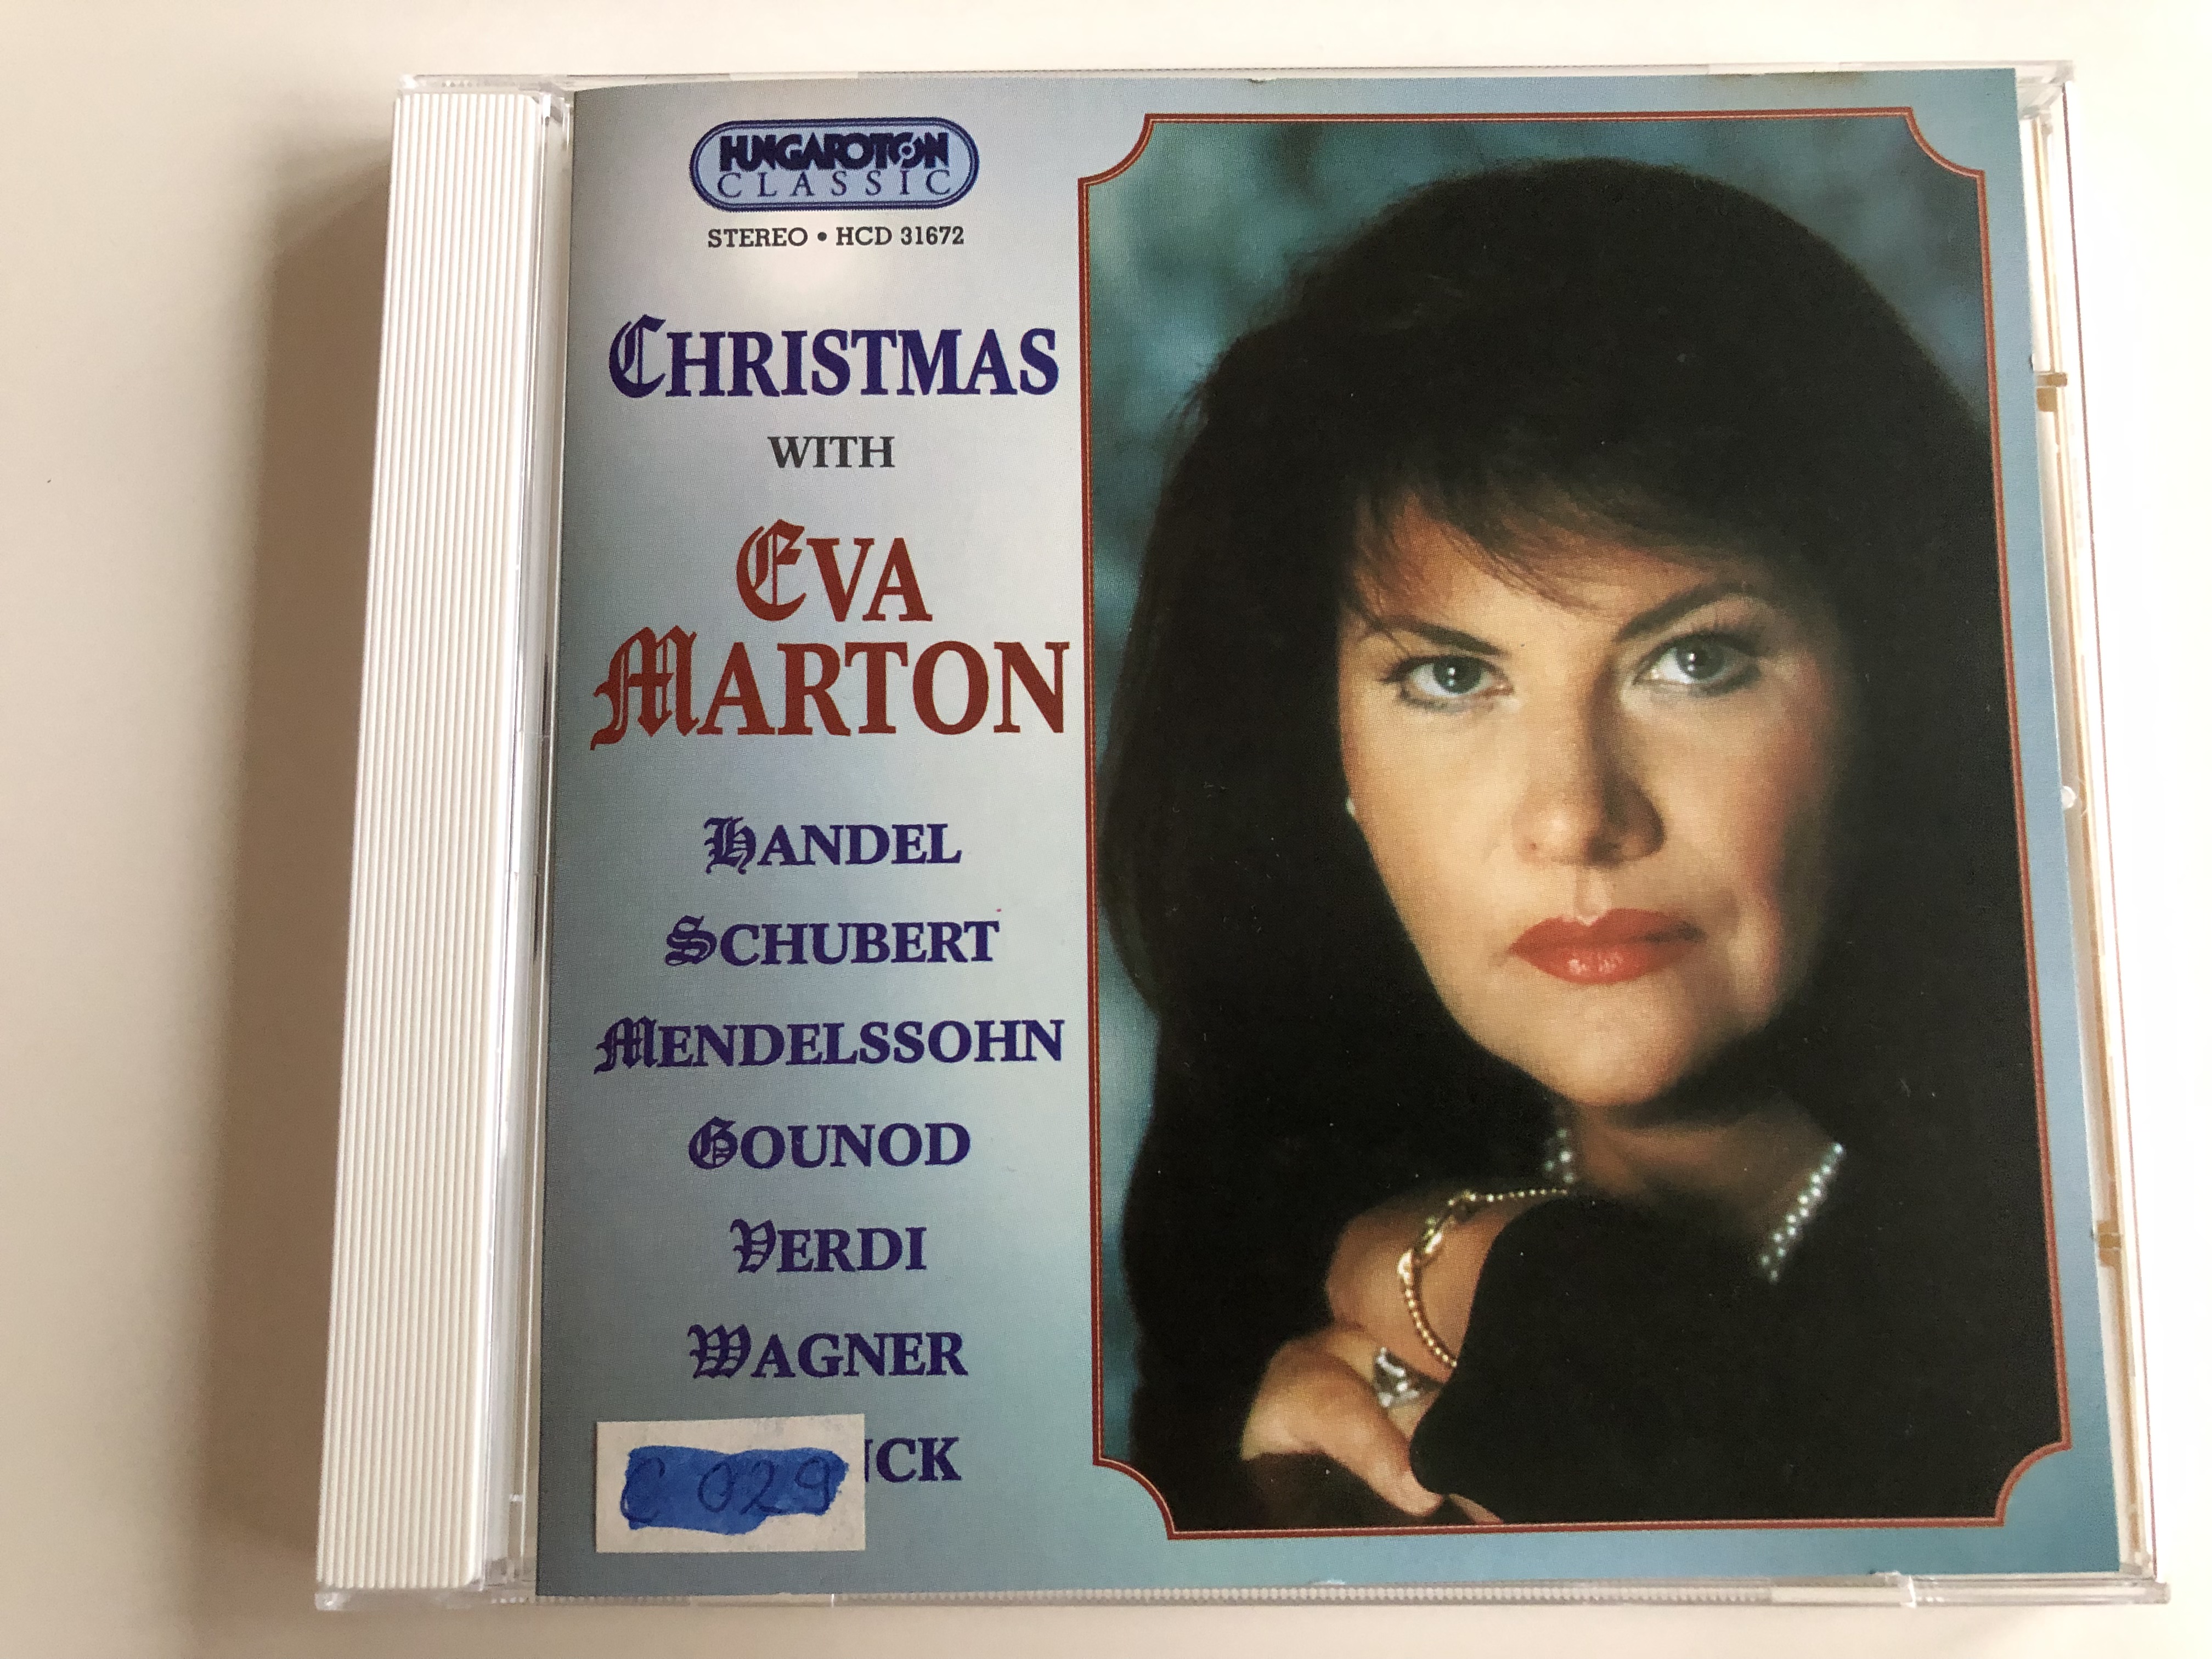 christmas-with-eva-marton-handel-schubert-mendelssohn-gounod-verdi-wagner-franck-b-rdos-audio-cd-1996-hungaroton-classic-hcd-31672-1-.jpg